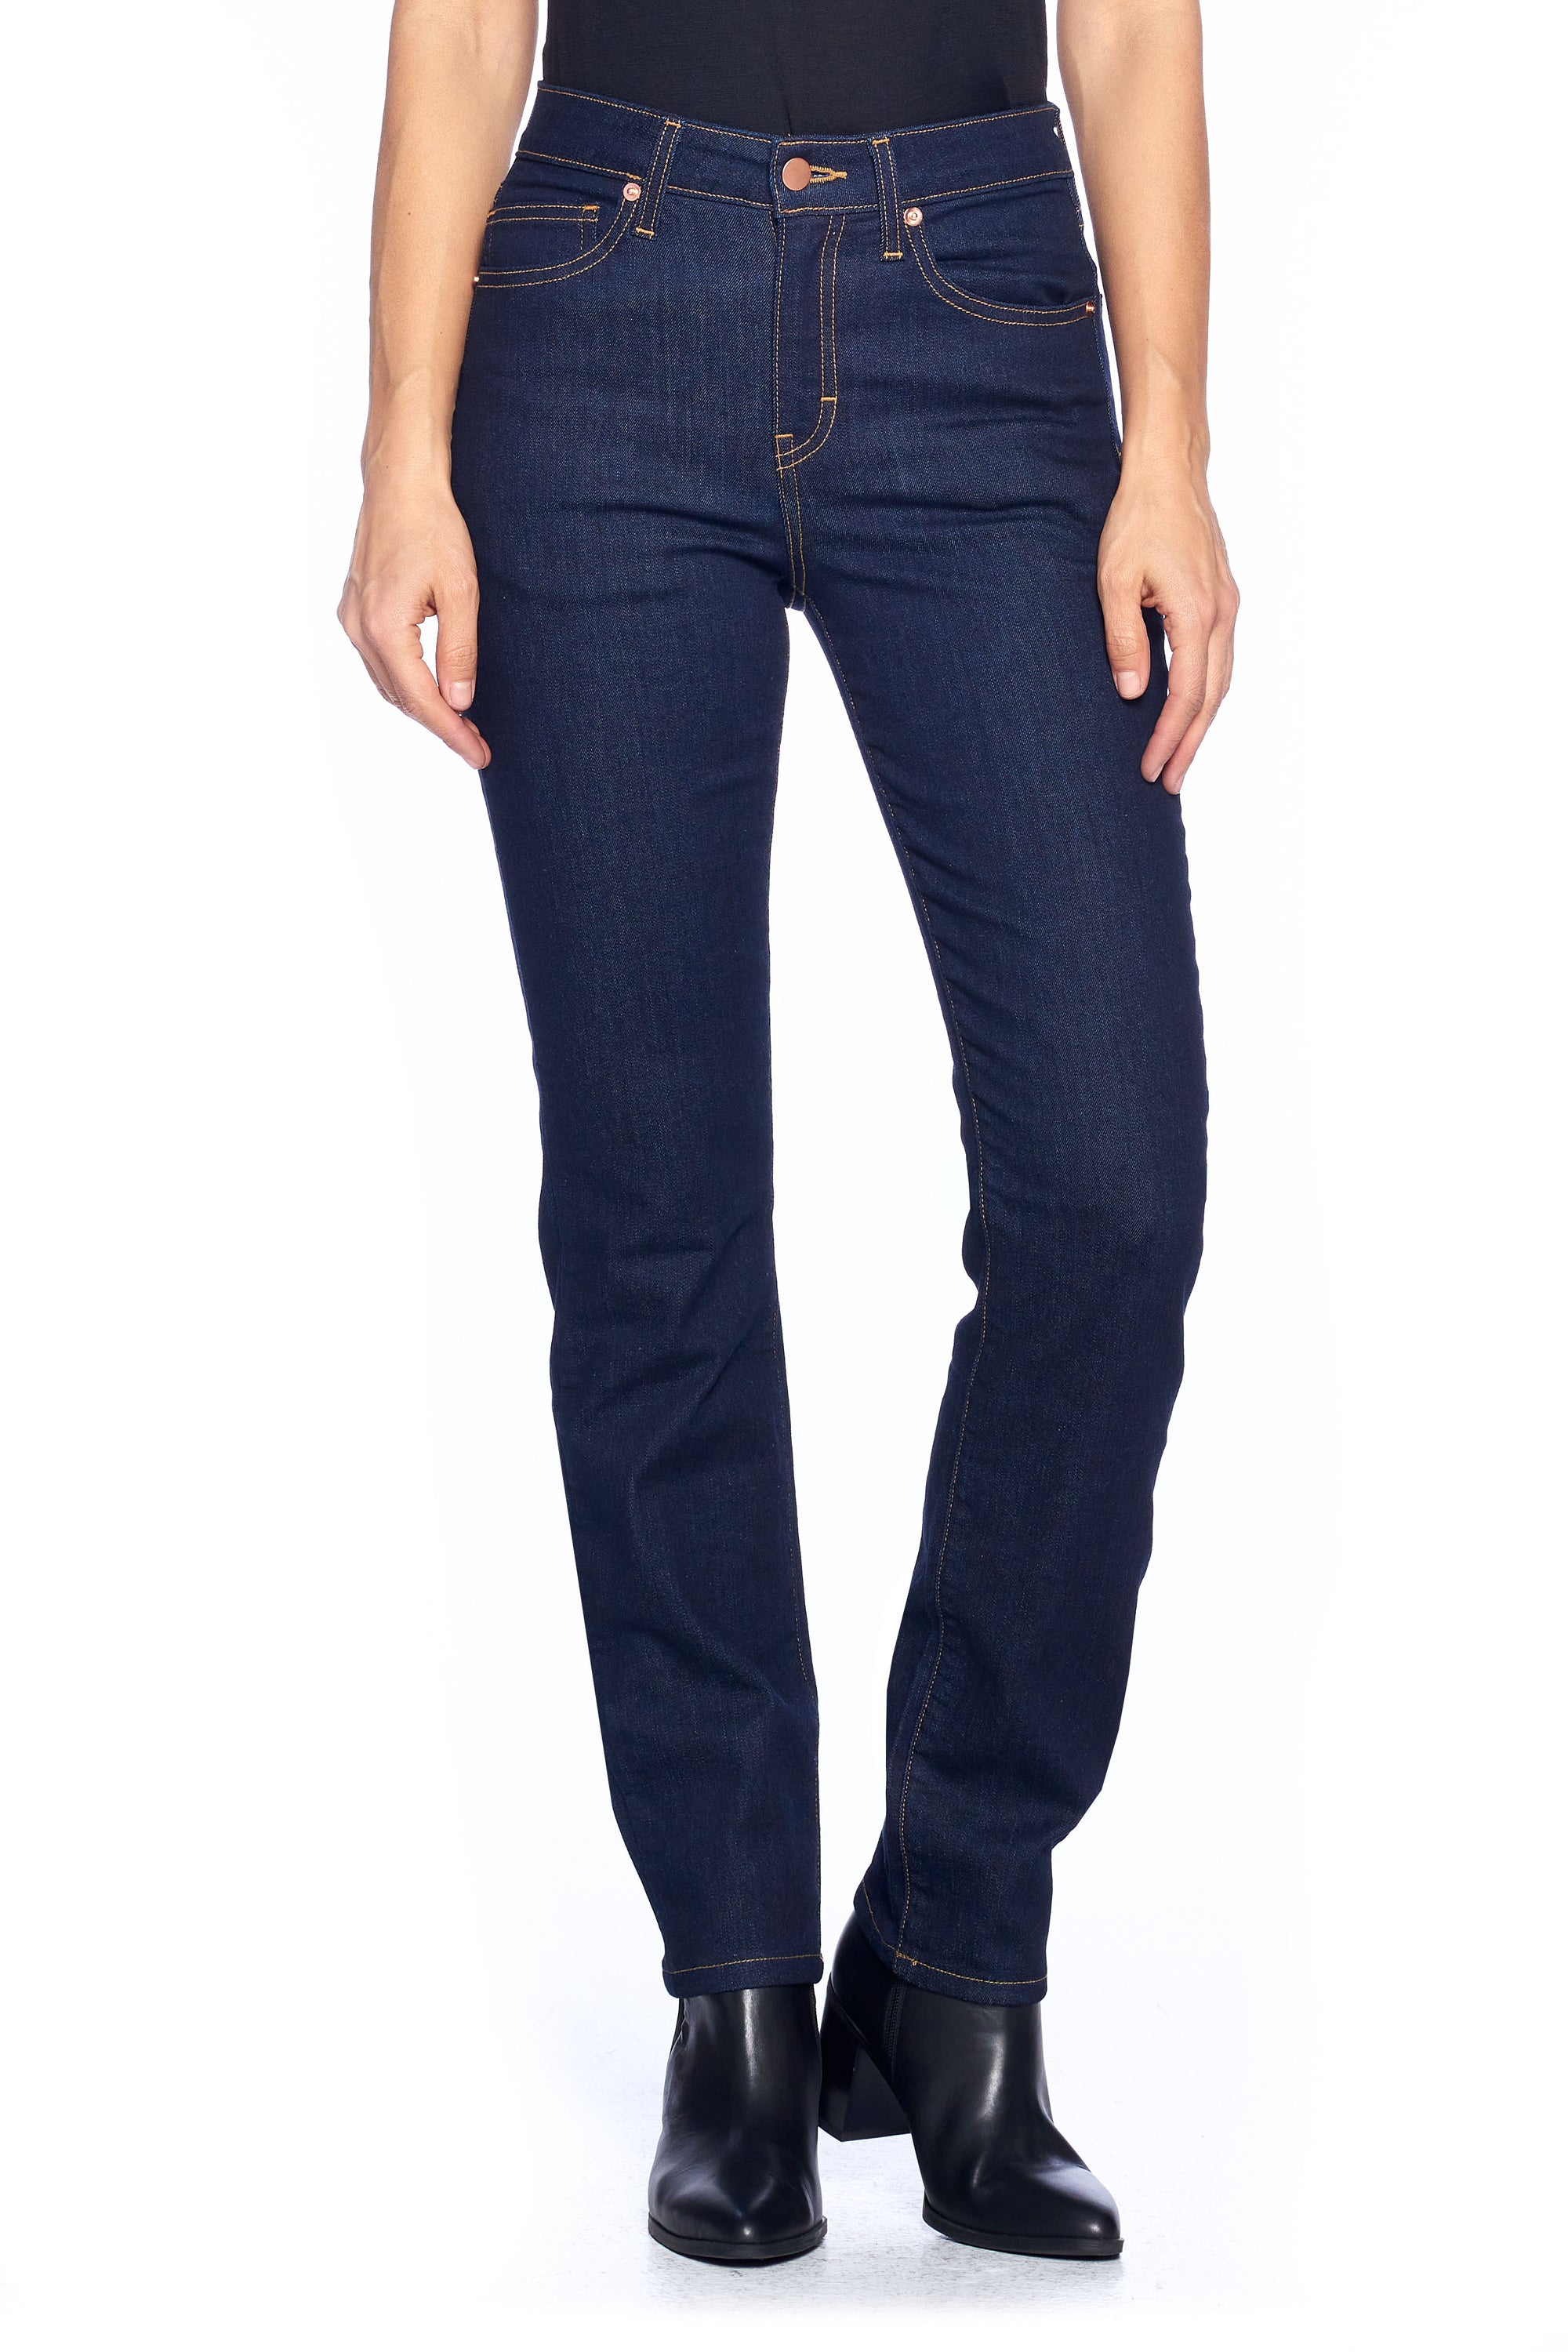 Aviator women's travel jeans in slim straight dark indigo